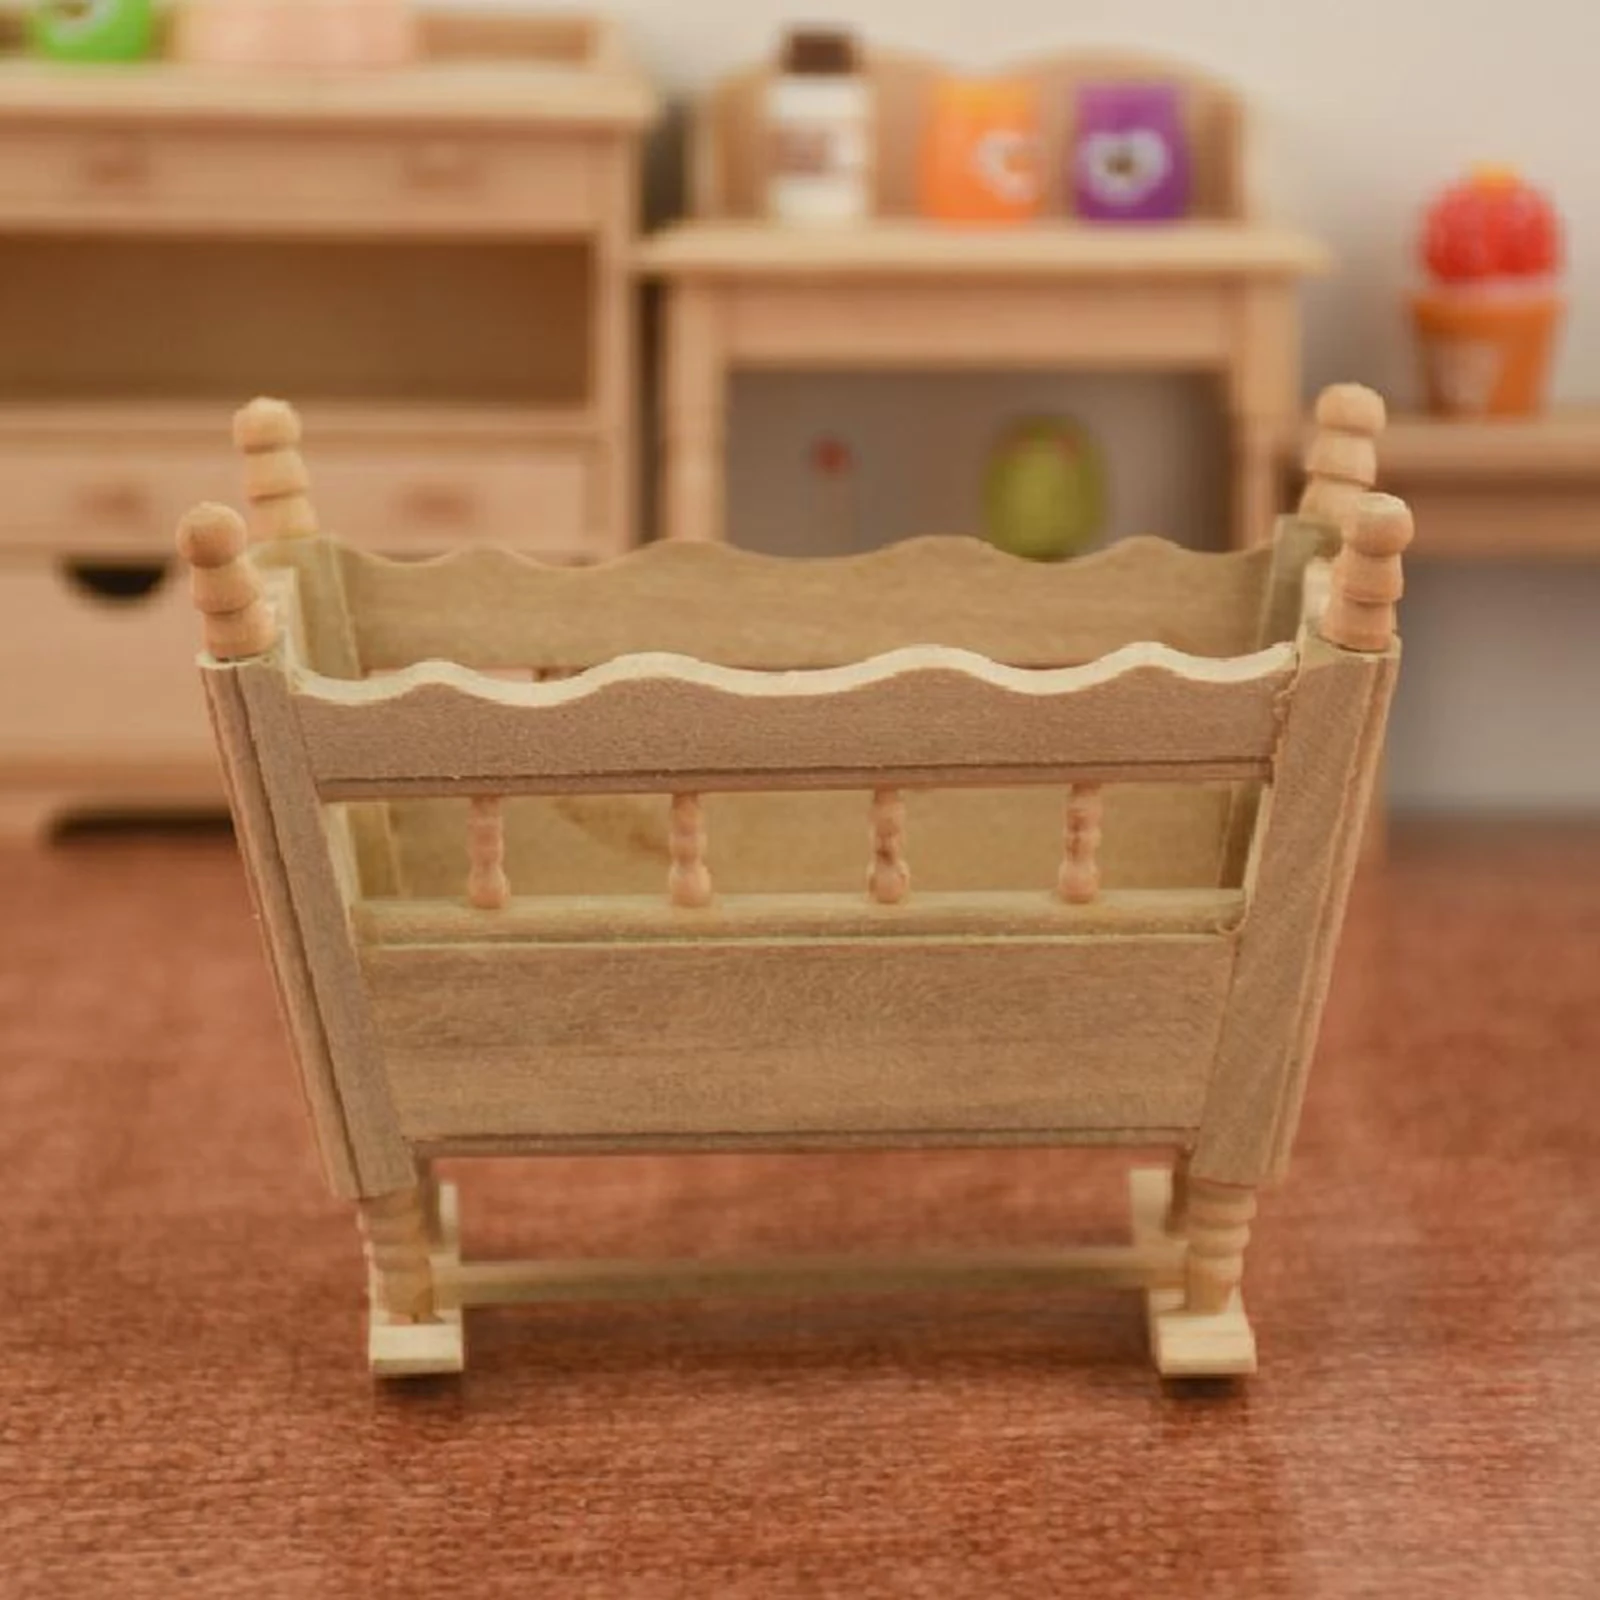 1/12 Dollhouse Miniature Wooden Cradle Model Furniture Landscape Decoration